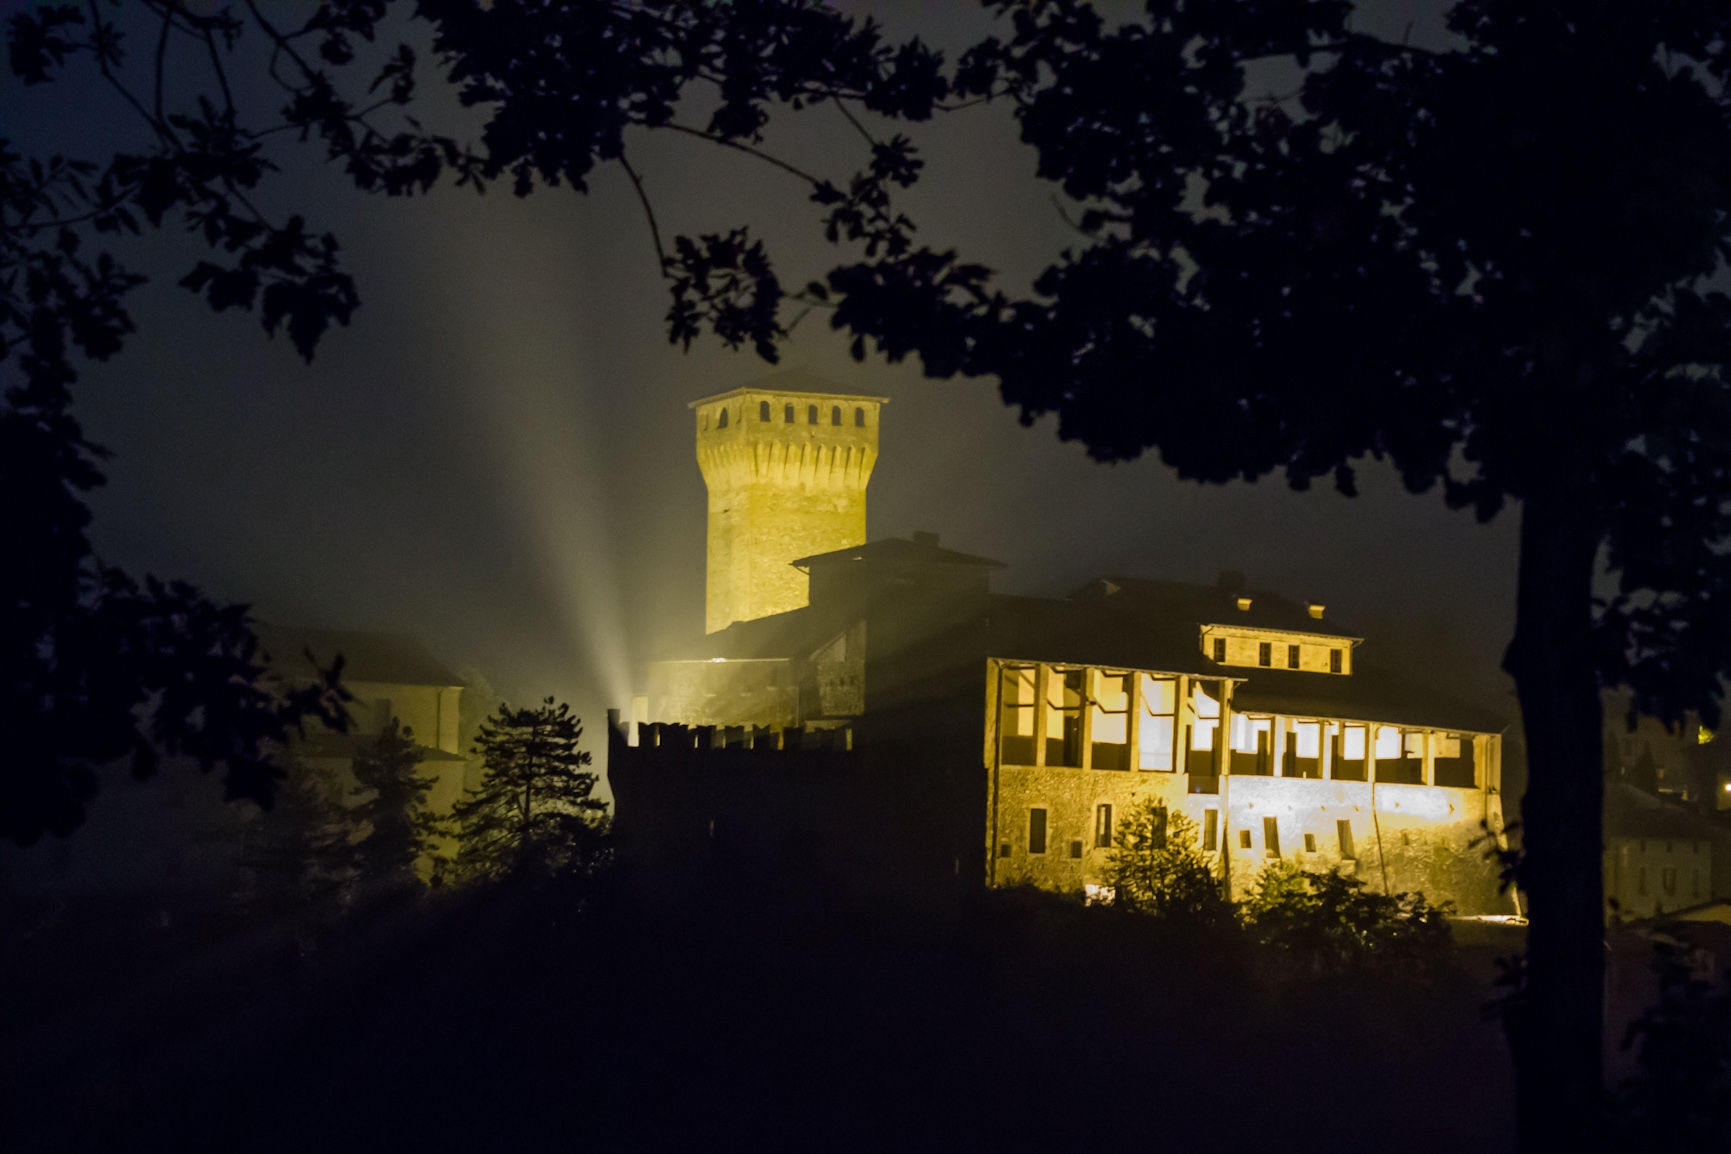 photo: https://upload.wikimedia.org/wikipedia/commons/4/4e/Castello_di_Levizzano_Rangone_visto_da_via_Sapiana_di_notte_ver2.jpg